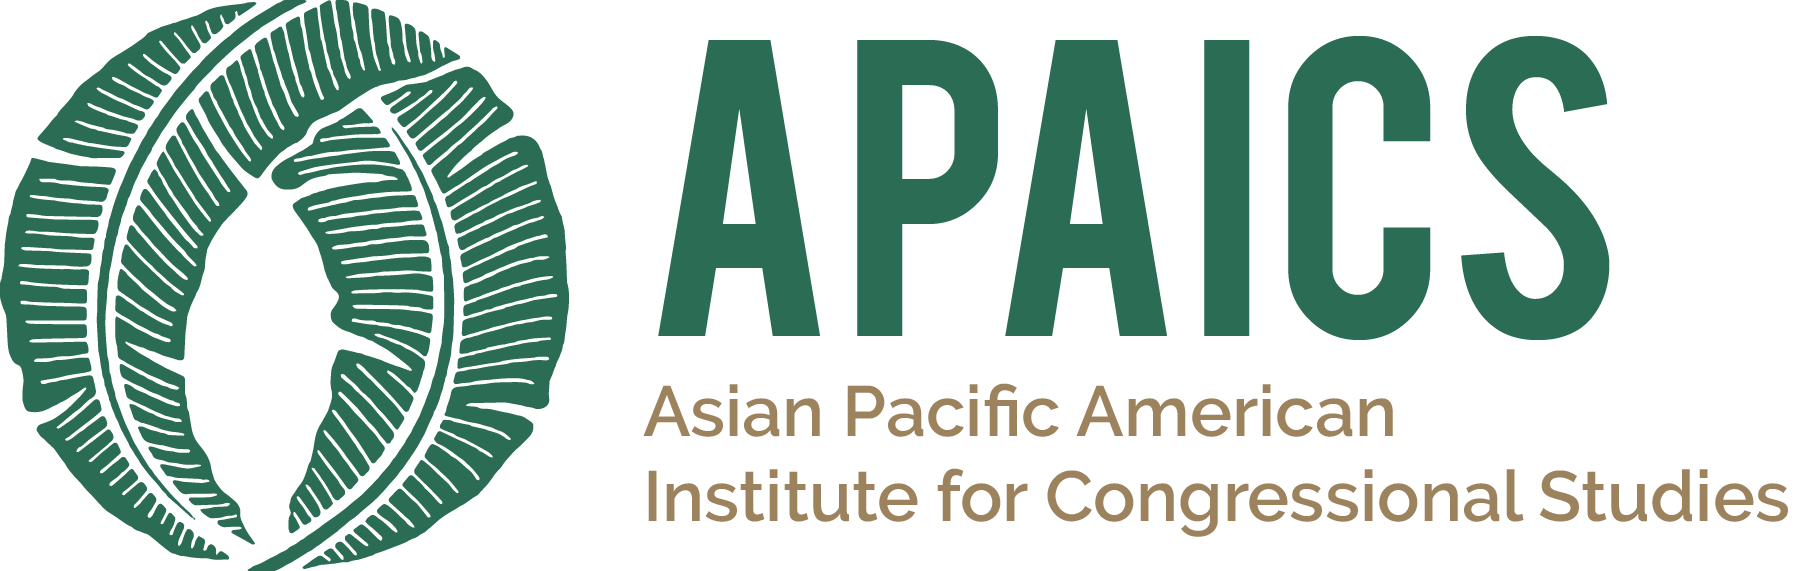 Asian Pacific American Institute of Congressional Studies